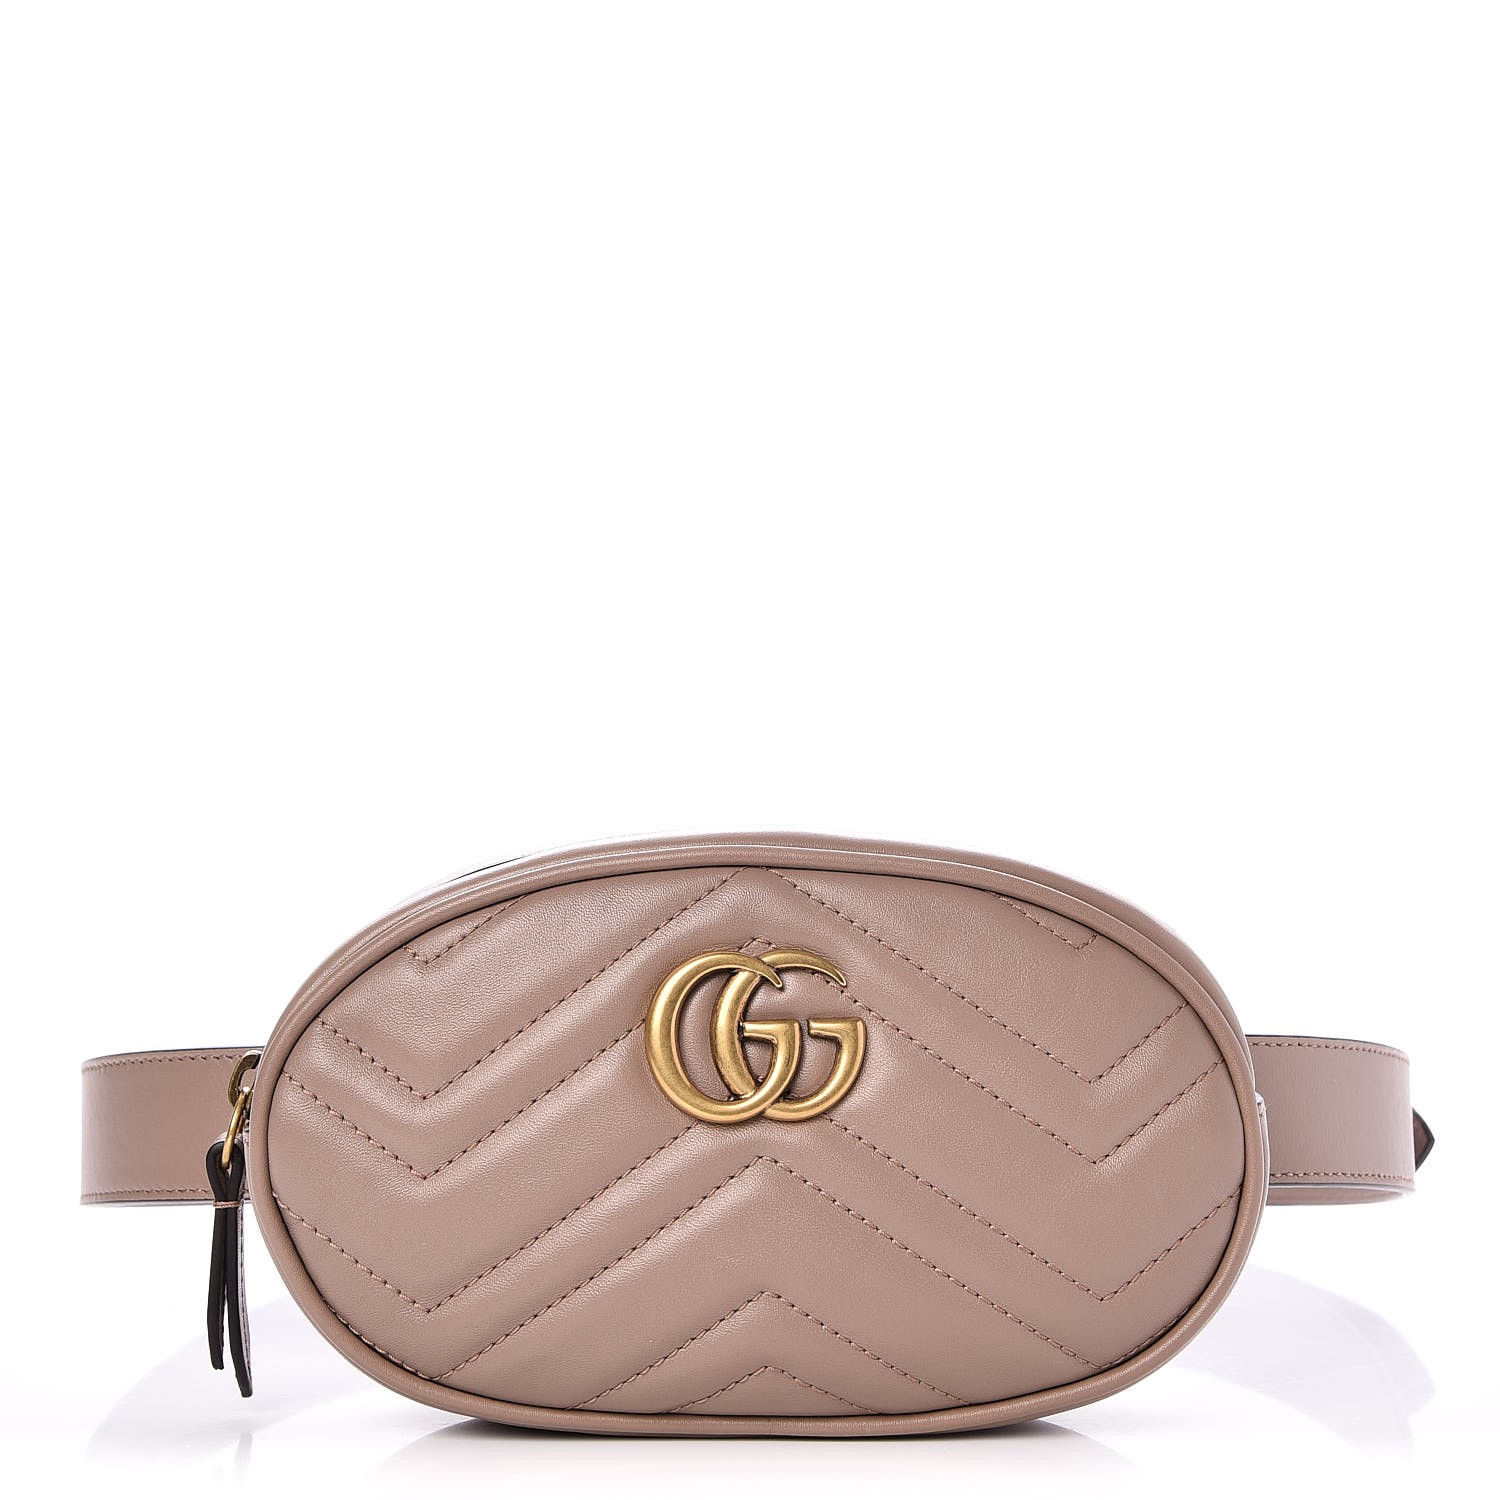 gucci belt bag size 95